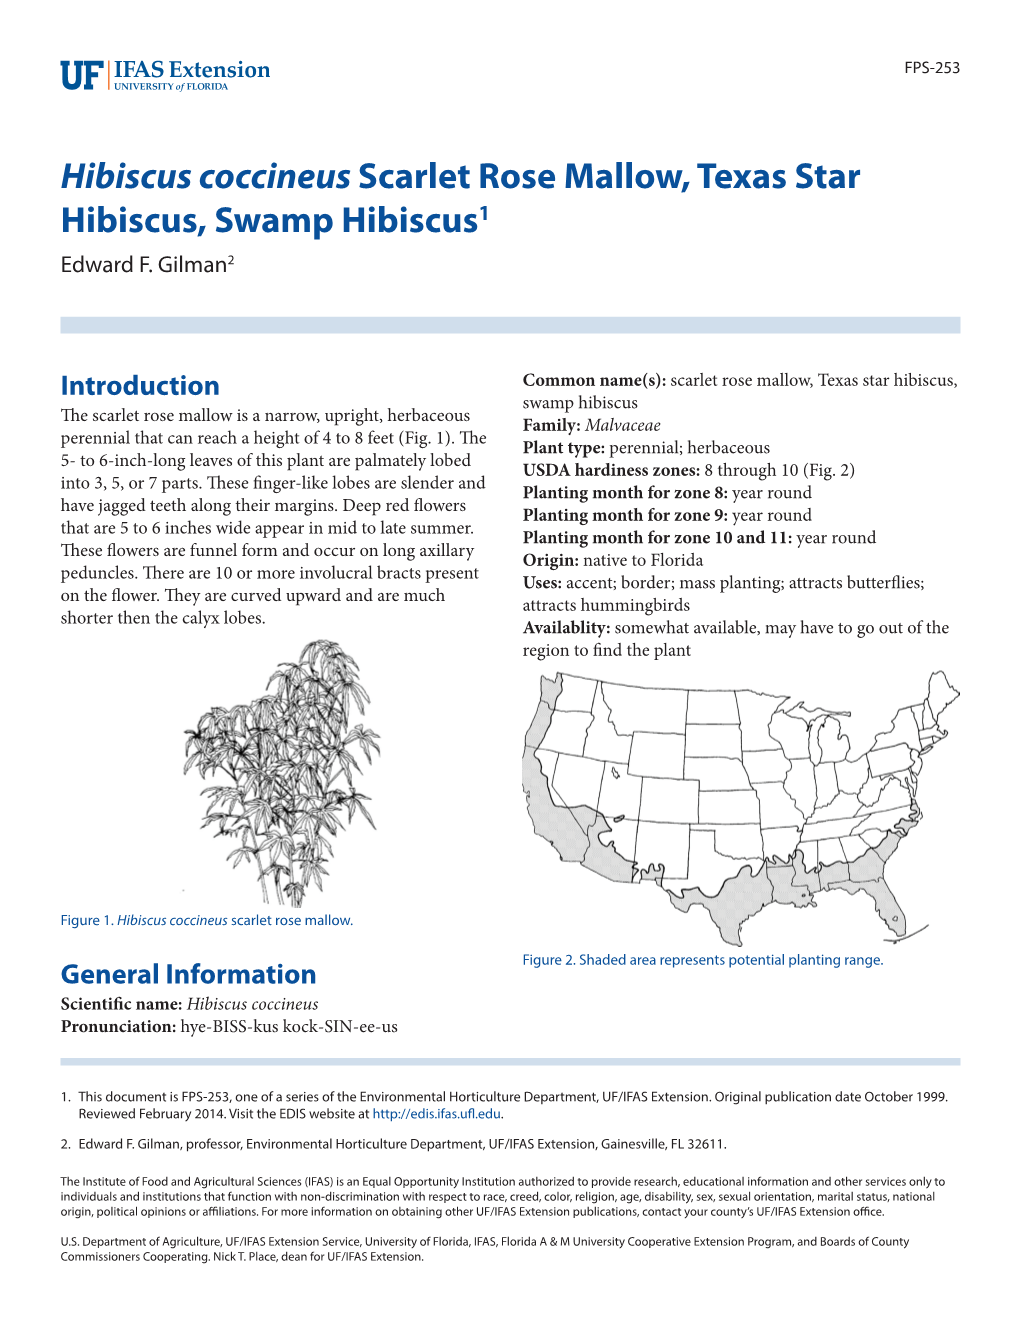 Hibiscus Coccineus Scarlet Rose Mallow, Texas Star Hibiscus, Swamp Hibiscus1 Edward F